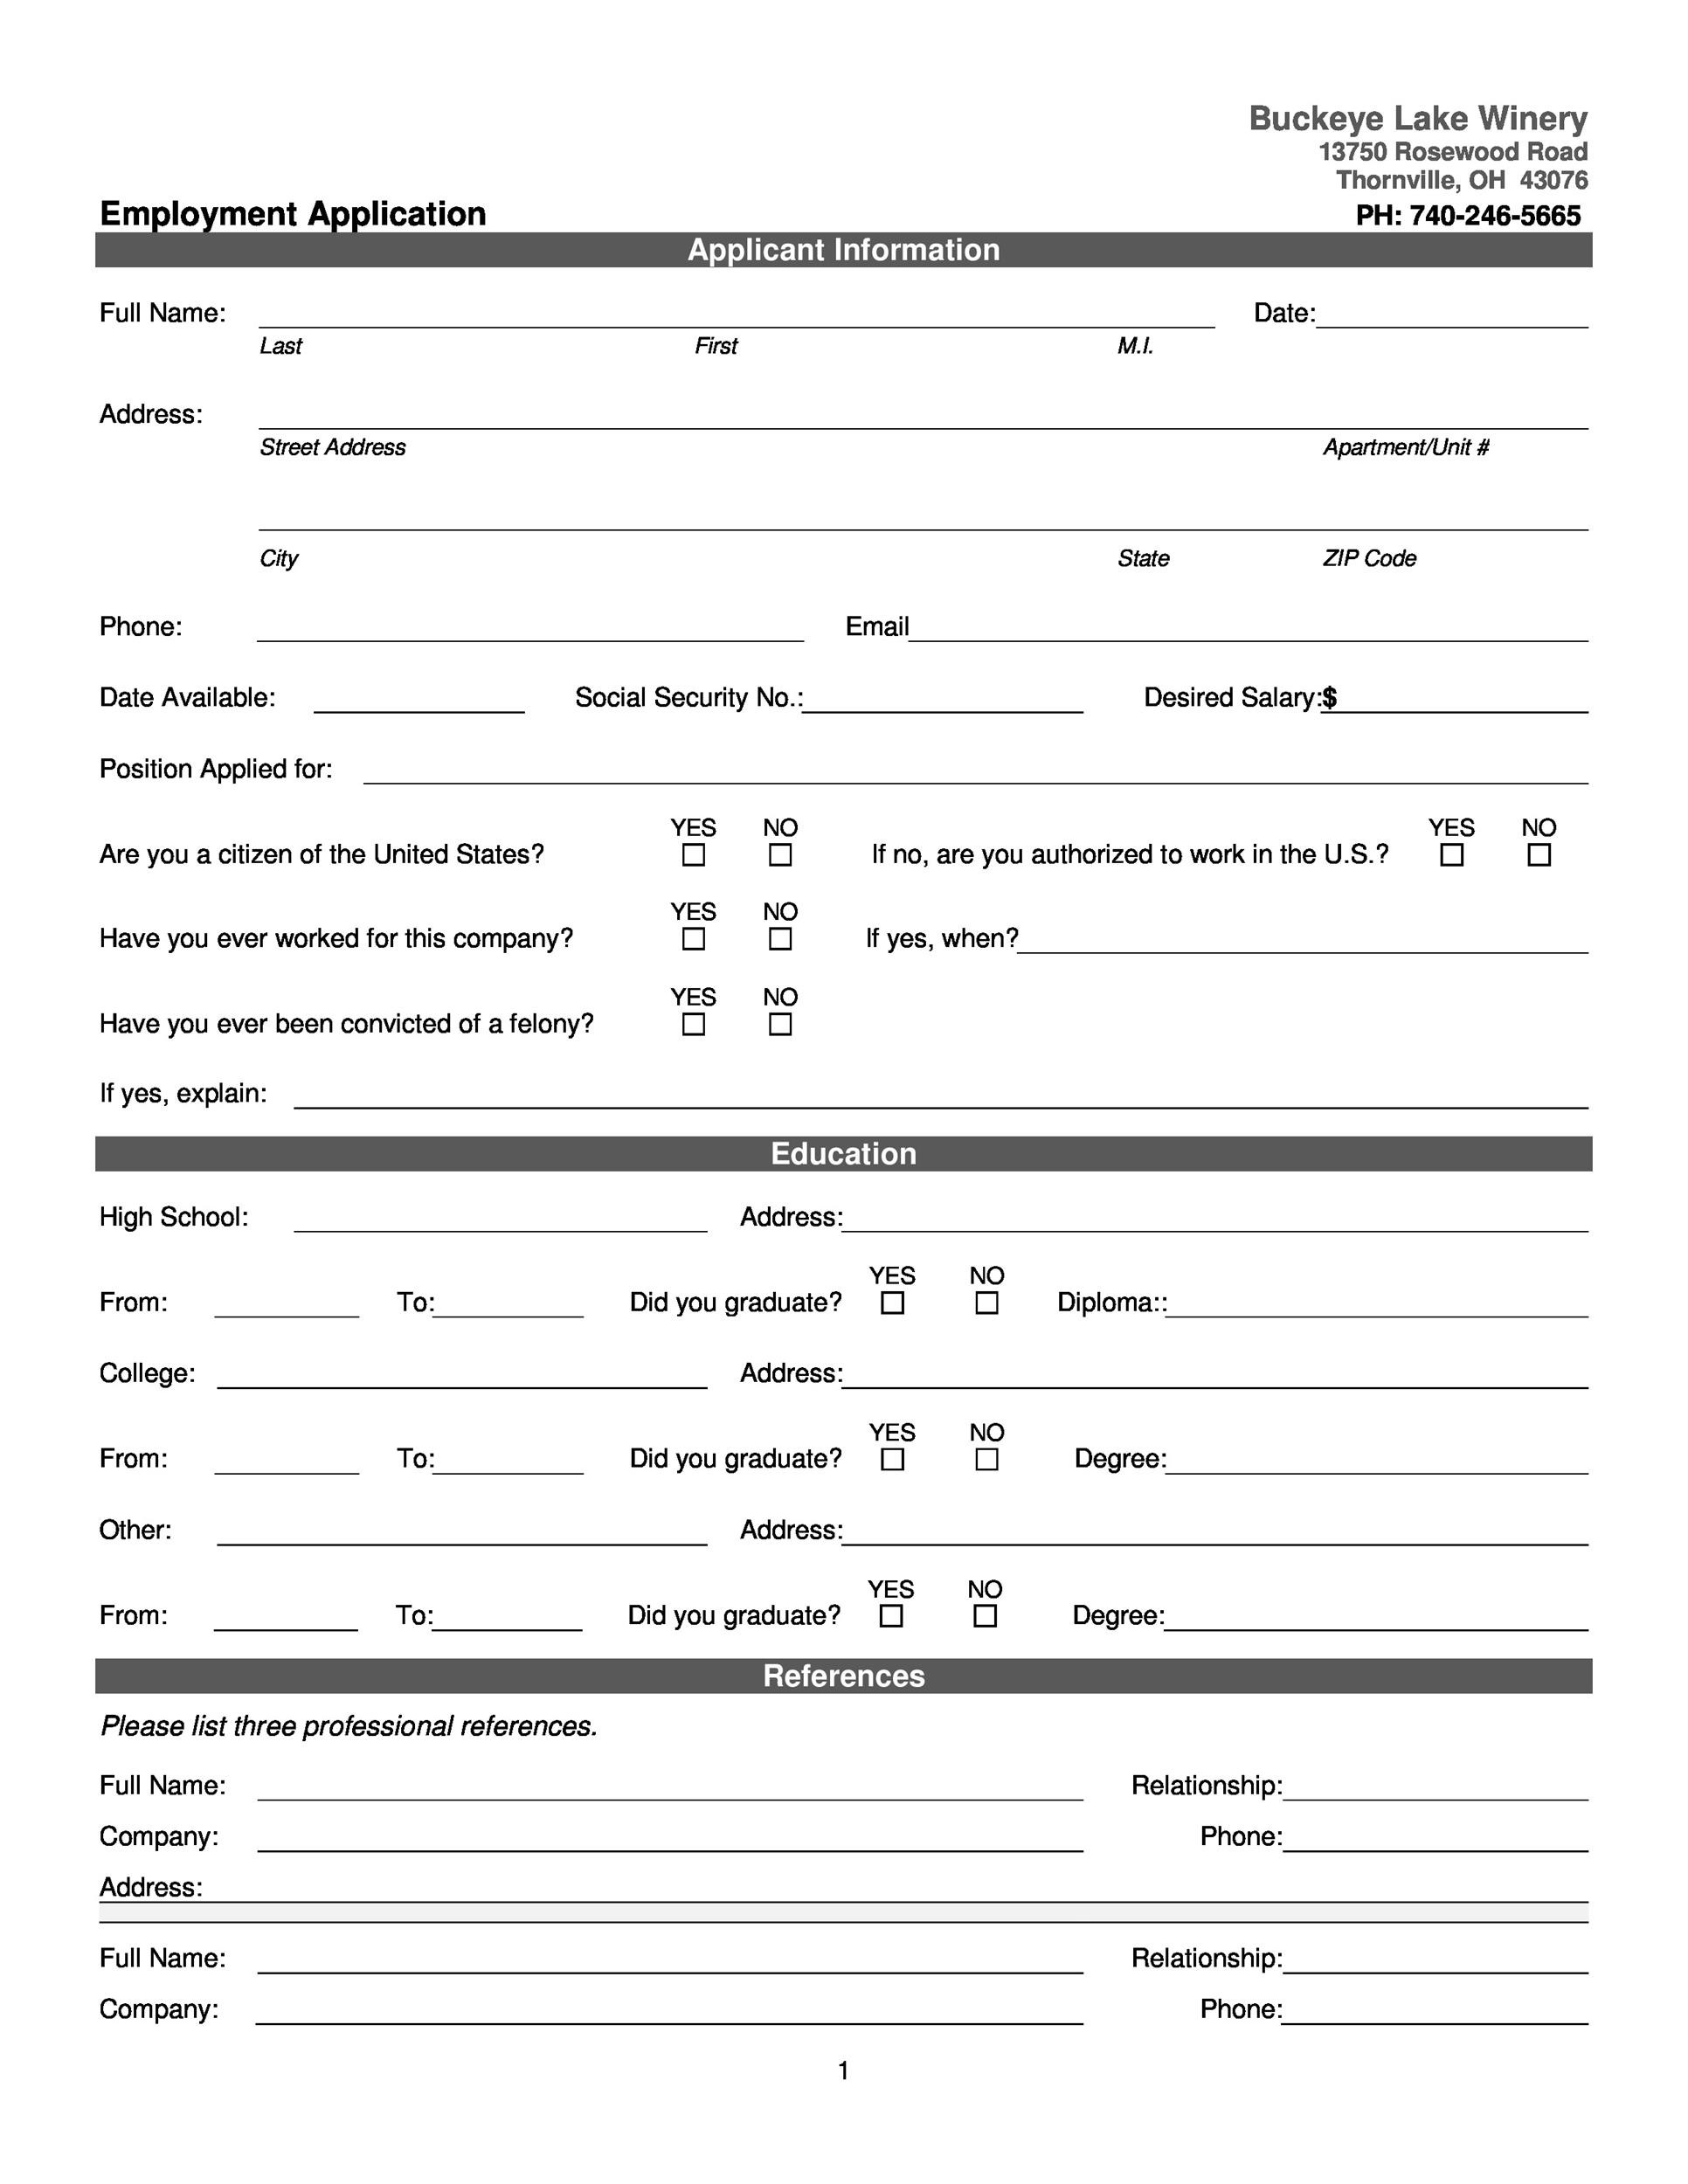 50 Free Employment Job Application Form Templates Printable TemplateLab - Application For Employment Form Free Printable